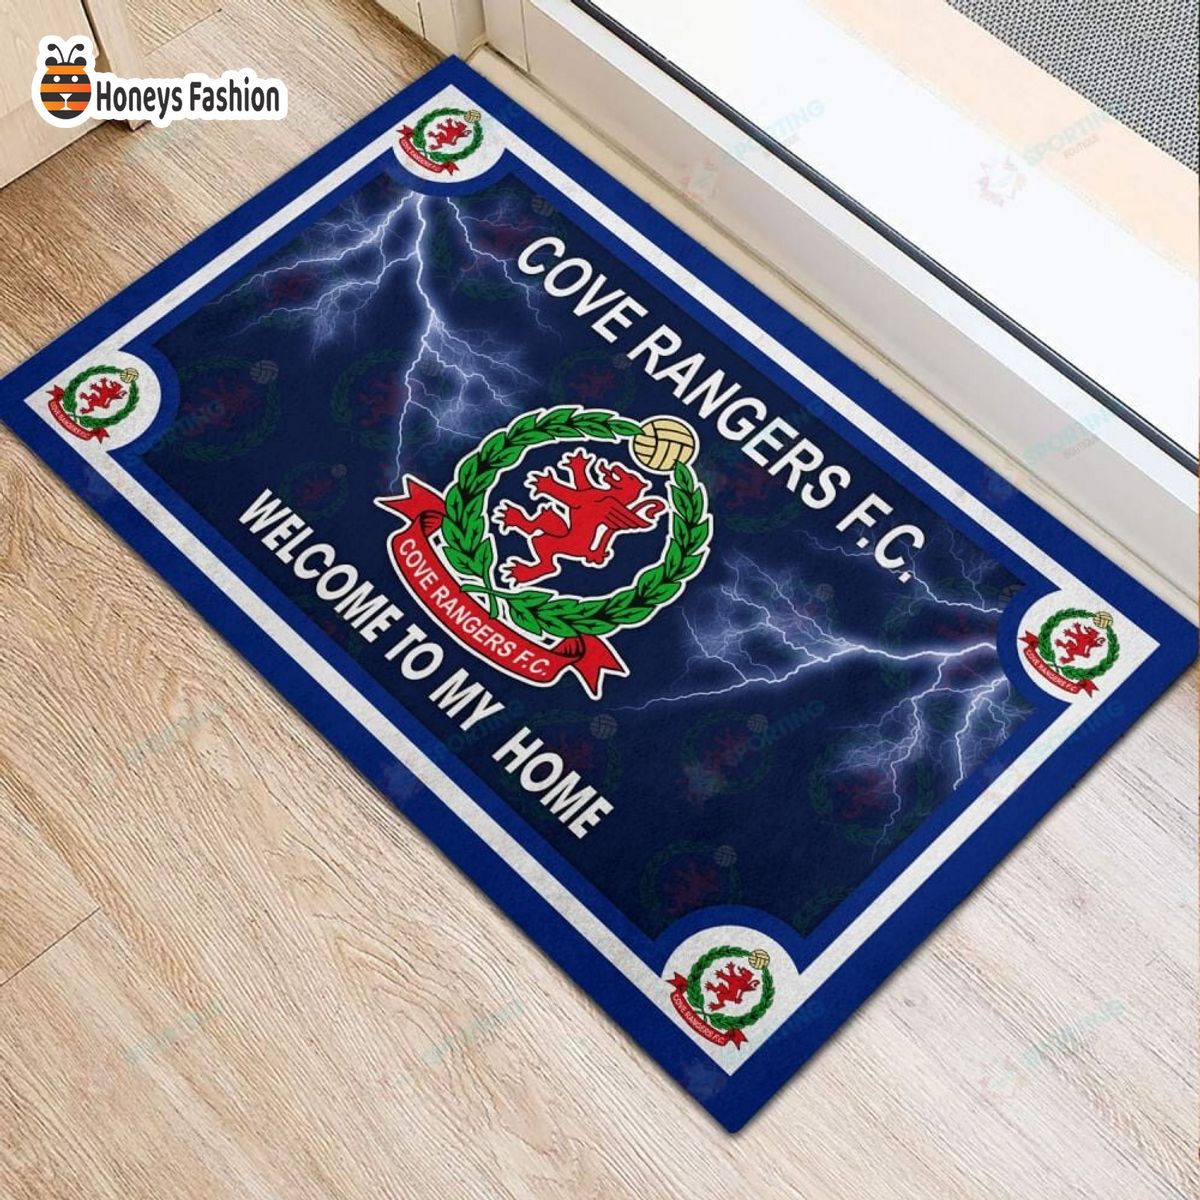 Cove Rangers F.C. welcome to my home doormat